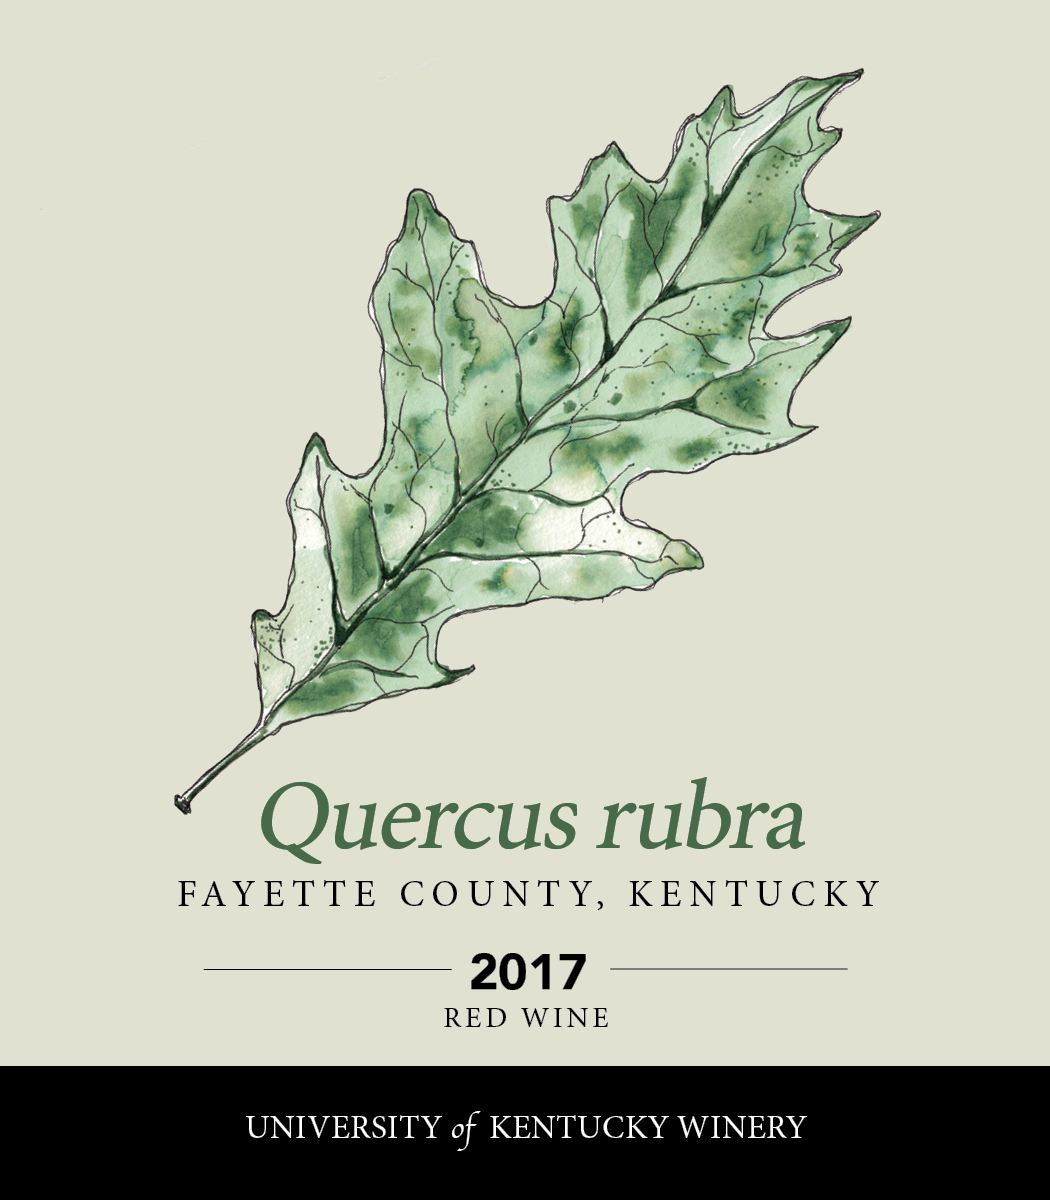 Quercus rubra 2017 Red wine